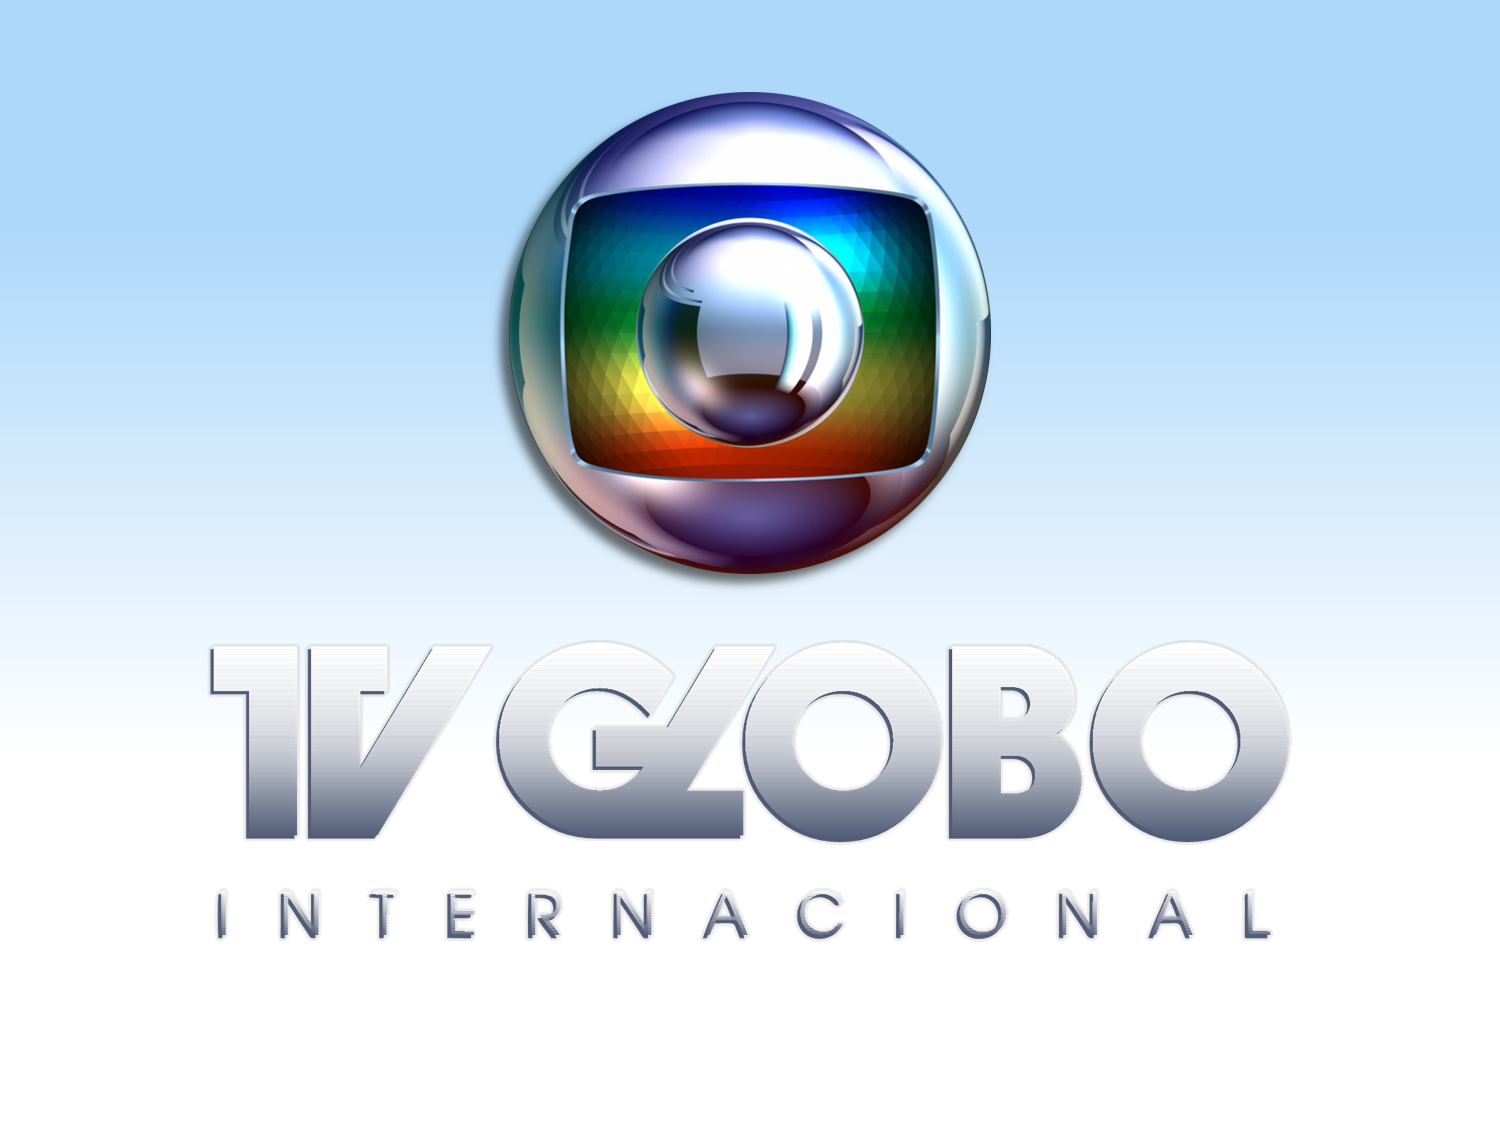 Интернационал тв. TV Globo. Globo TV International. Globo для канала. TV Globo logo.